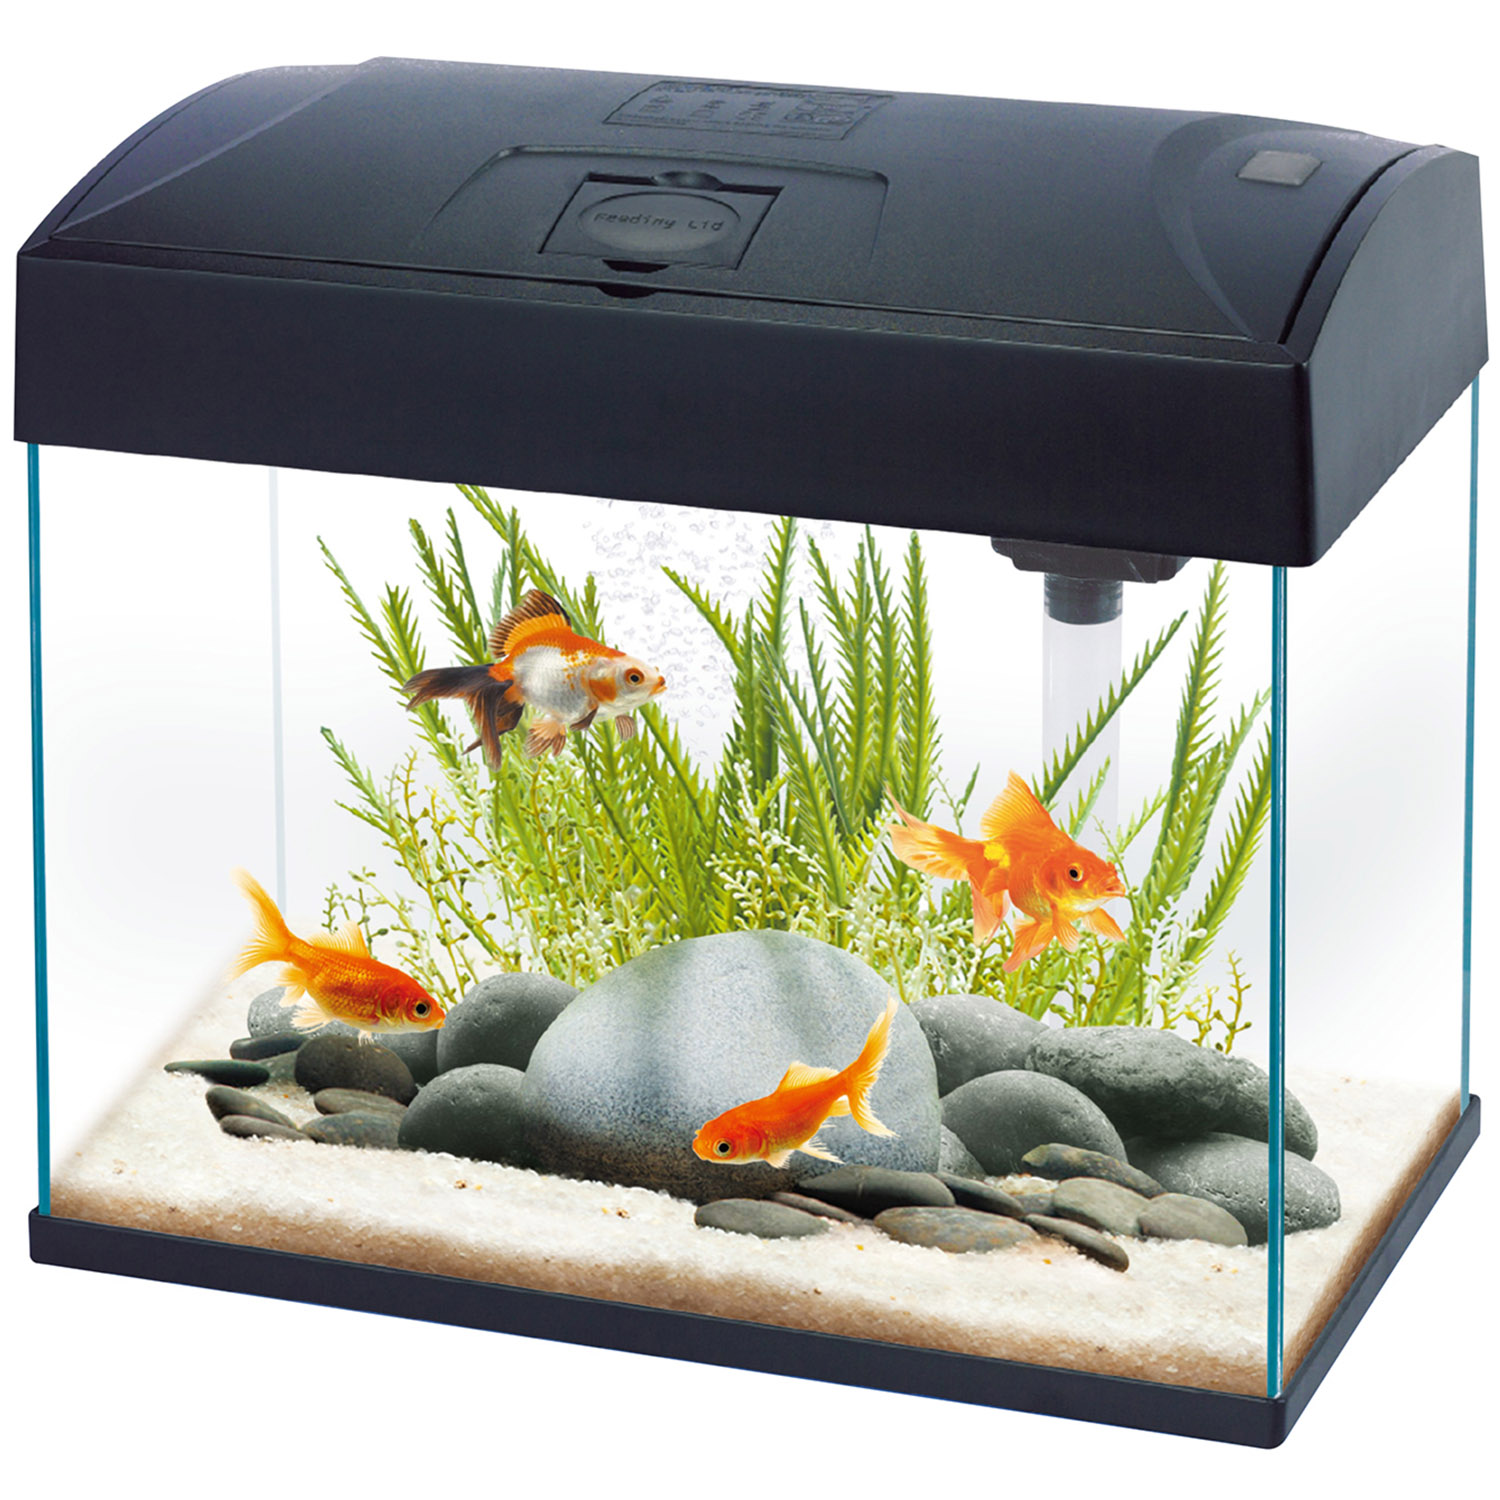 Fish R Fun Black Rectangular LED Fish Tank 20L Image